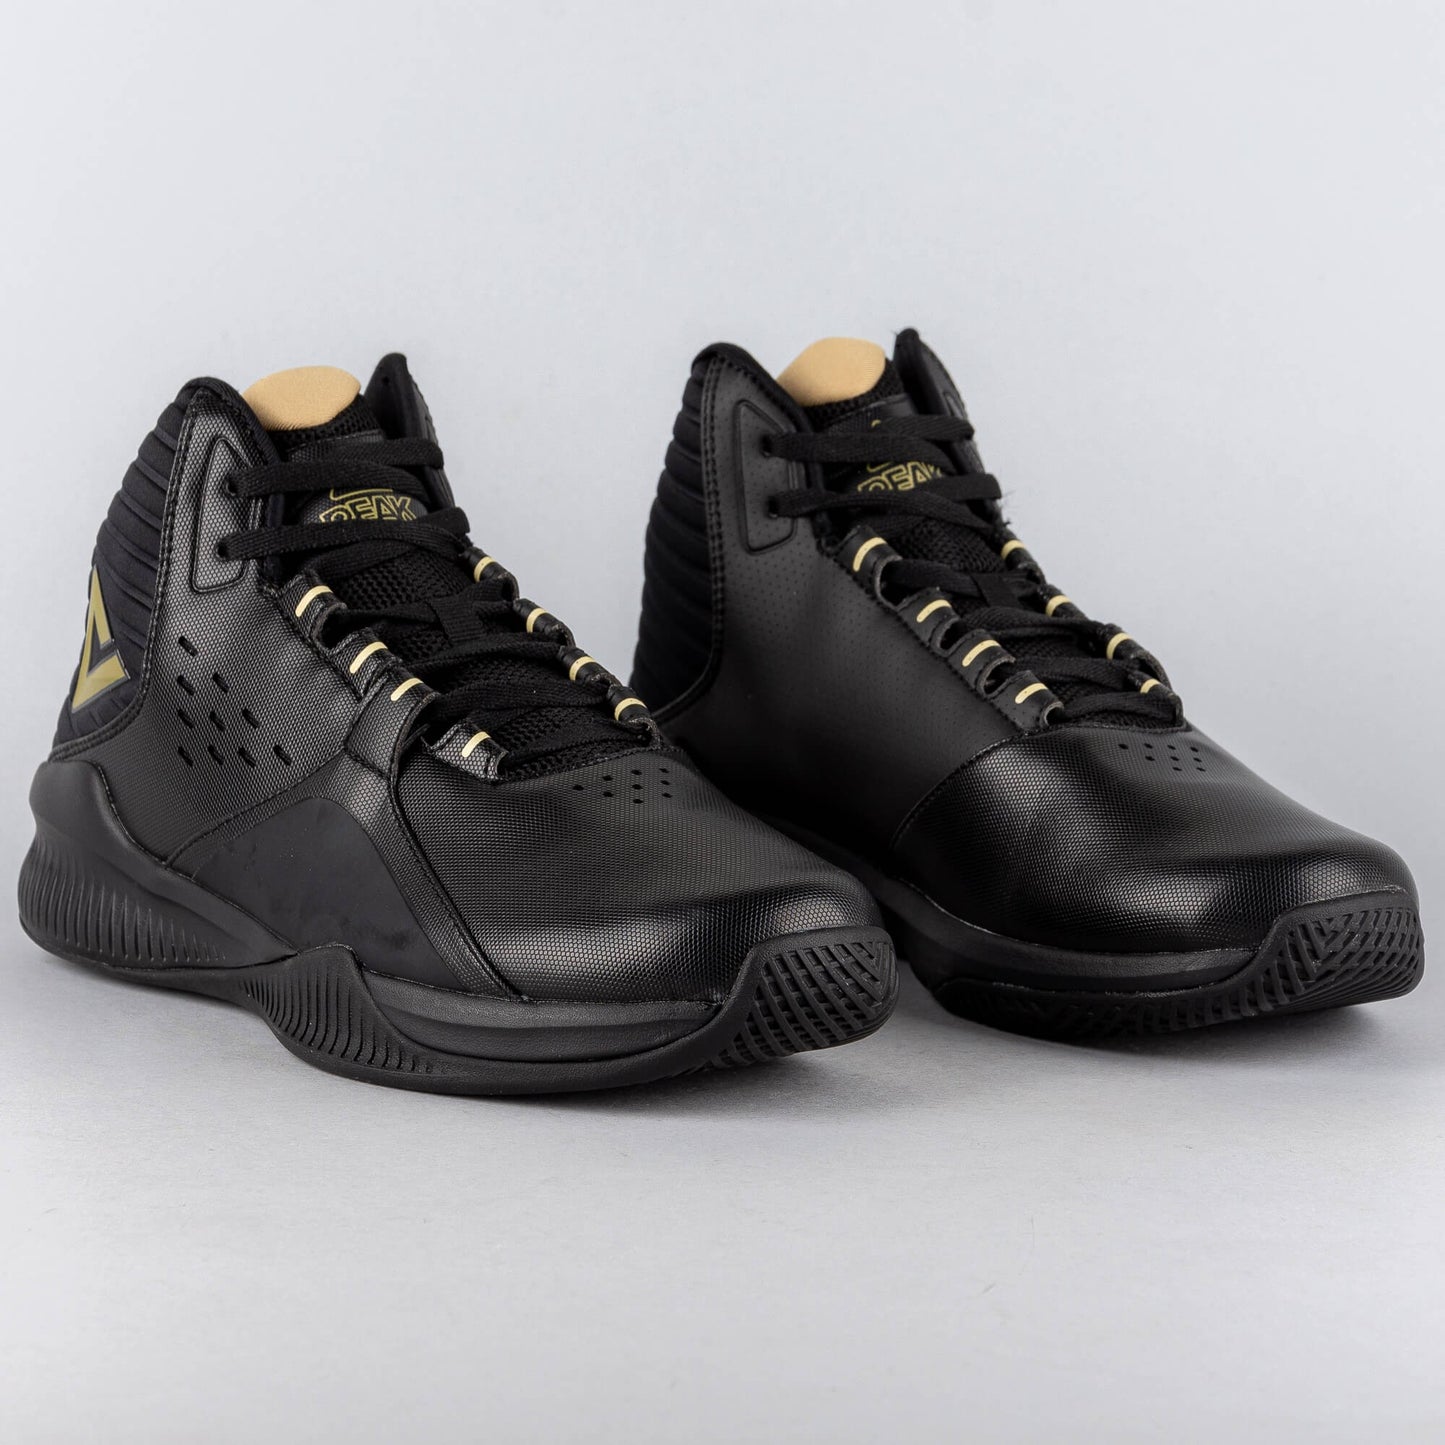 PEAK Rising Star Dynamic Basketball shoes Black